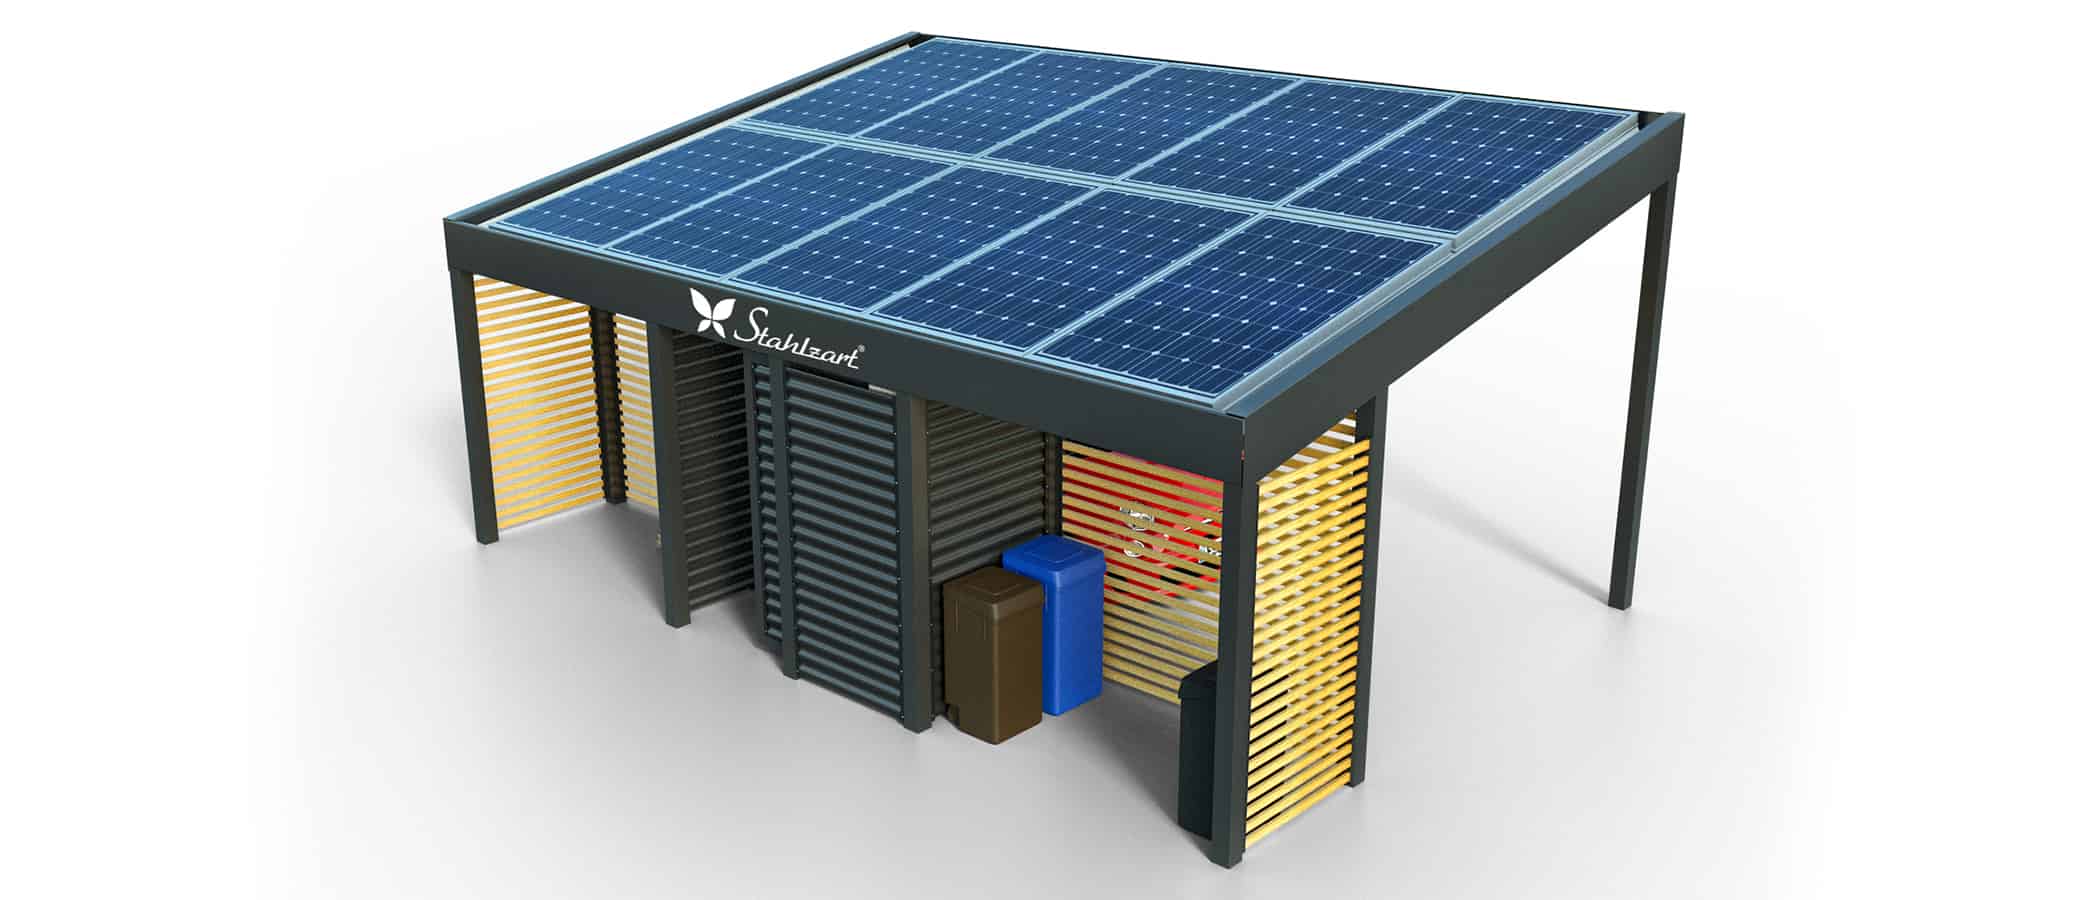 solar-carport-mit-schraegdach-solar-carports-e-fahrzeuge-pv-anlage-solarcarport-strom-solaranalge-e-auto-doppelcarport-metall-stahl-mit-geraeteraum-brennholz-fahrrad-muelltonnen-modern-stahlzart